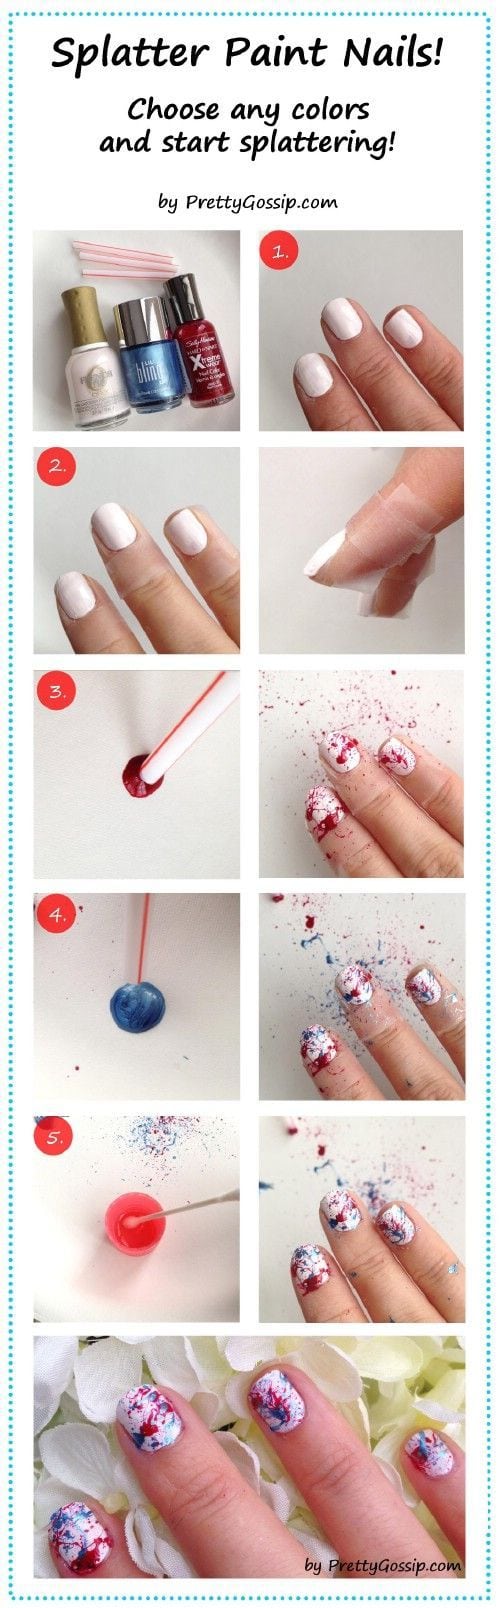 [ad_1]

Splattered Nails Option 2
Source by fokjewijnsma
[ad_2]
			
			…